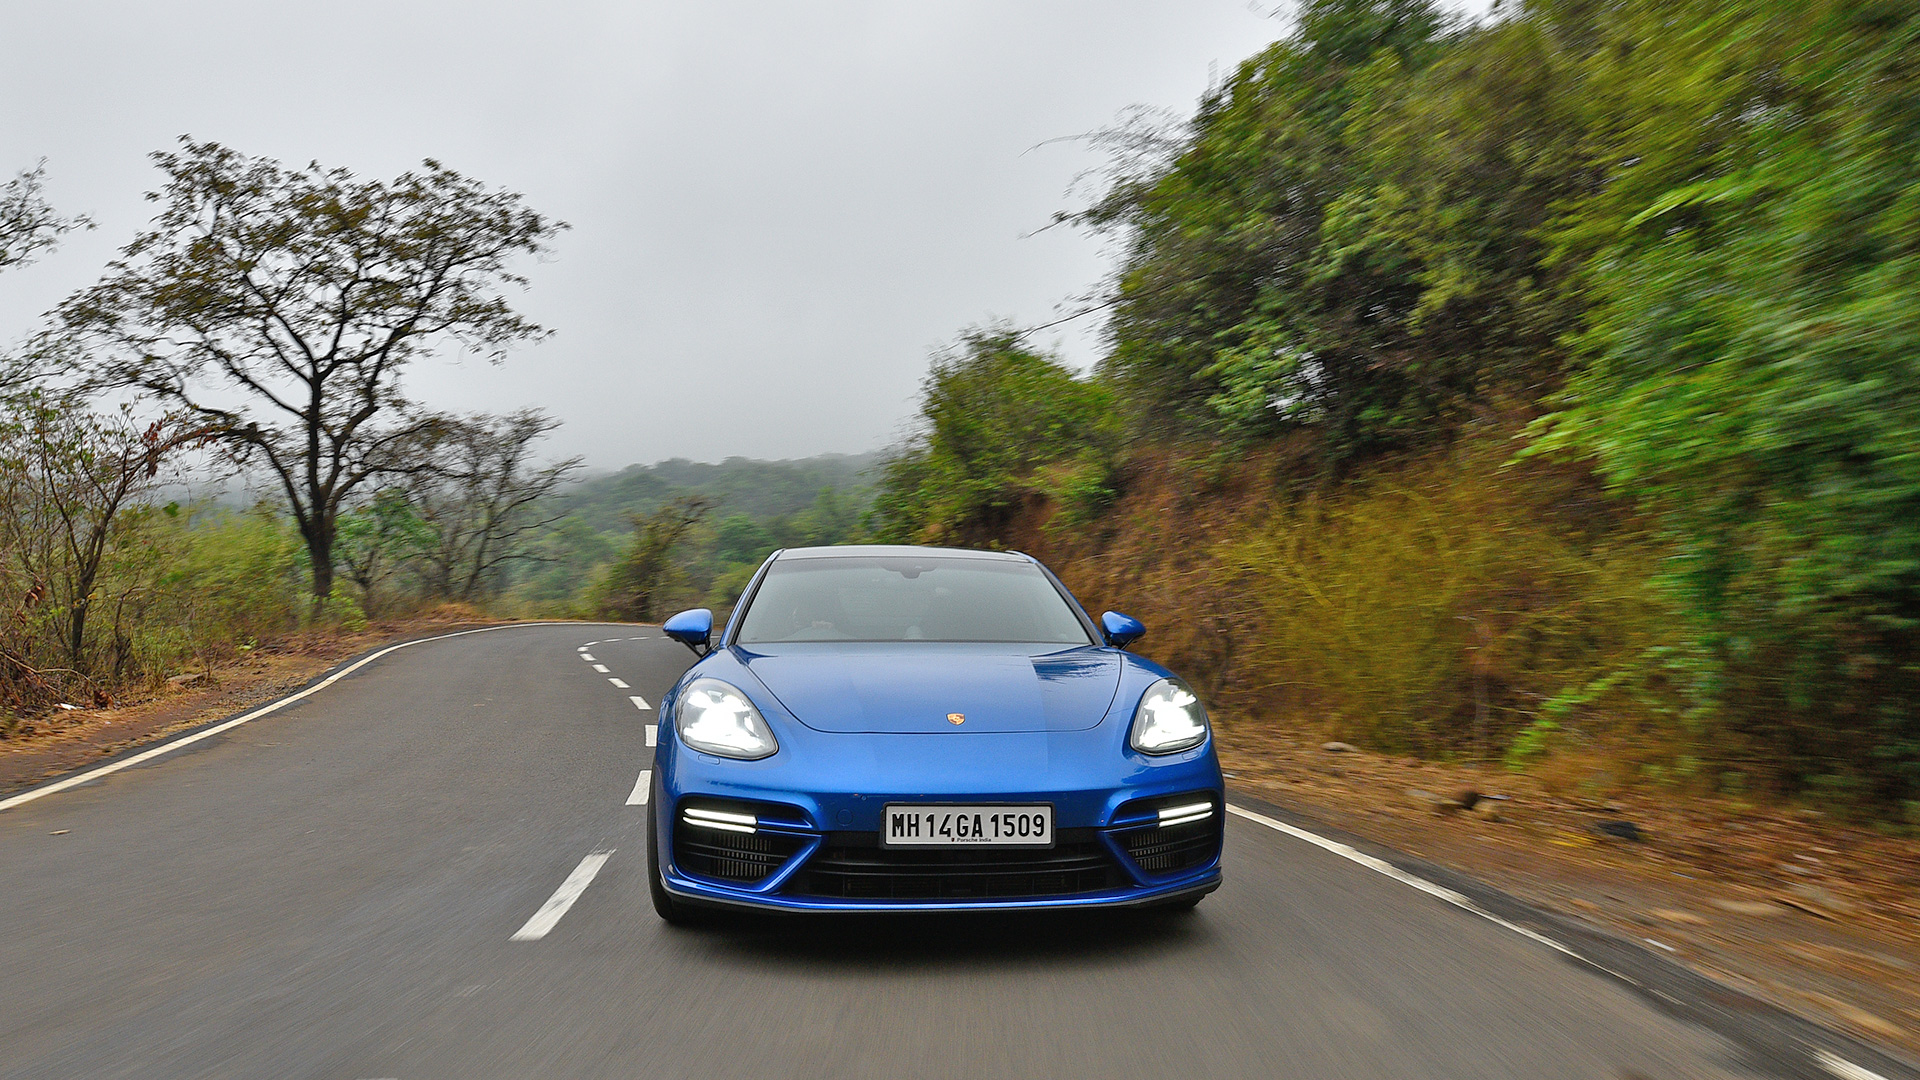 Porsche Panamera Price In Kerala